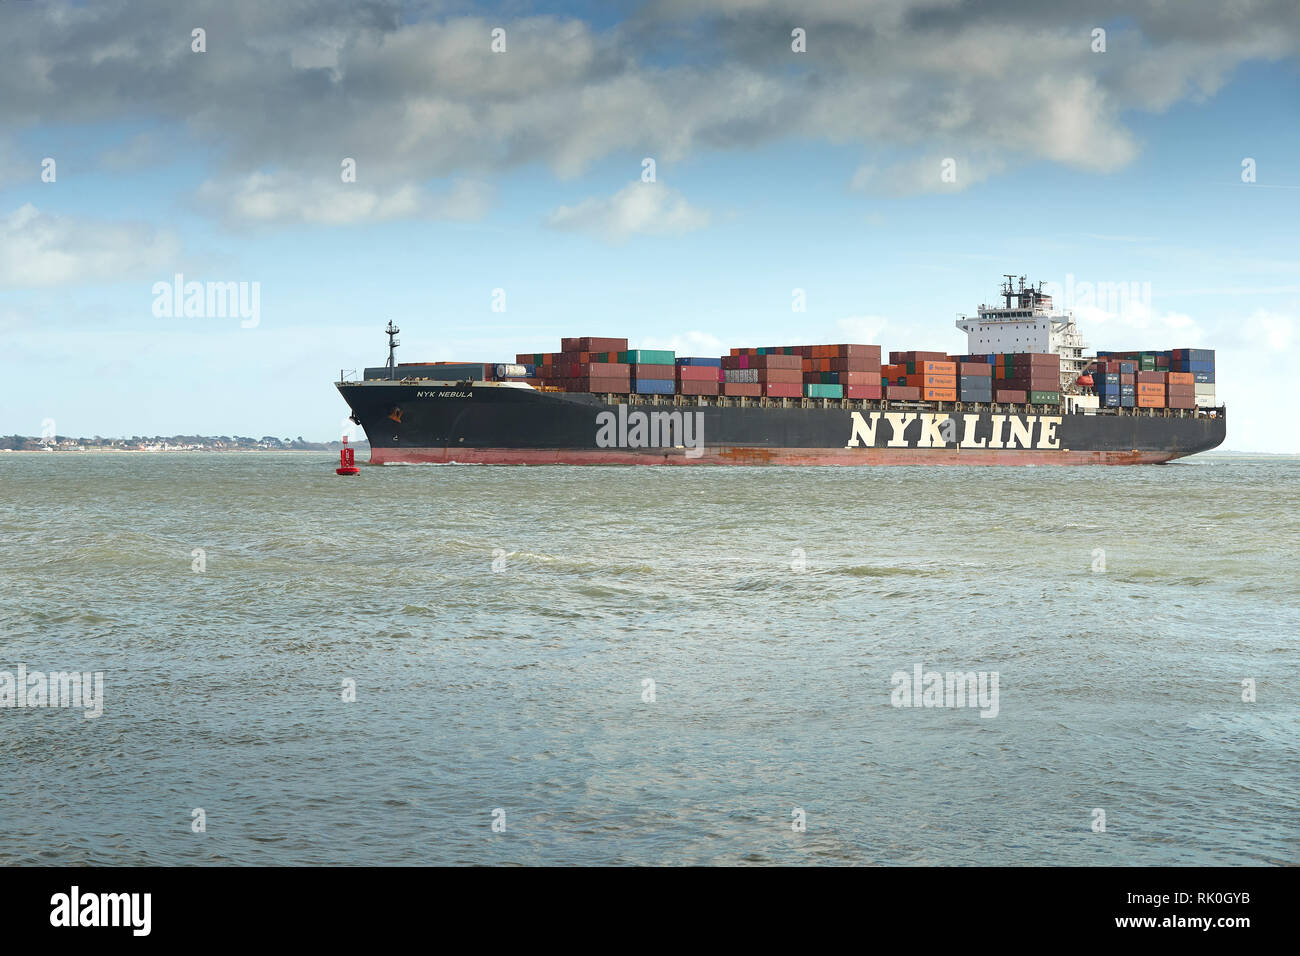 NYK LINE Container Ship, NYK NEBULA, Approaching The Port Of Southampton, United Kingdom, 7 February 2019 Stock Photo